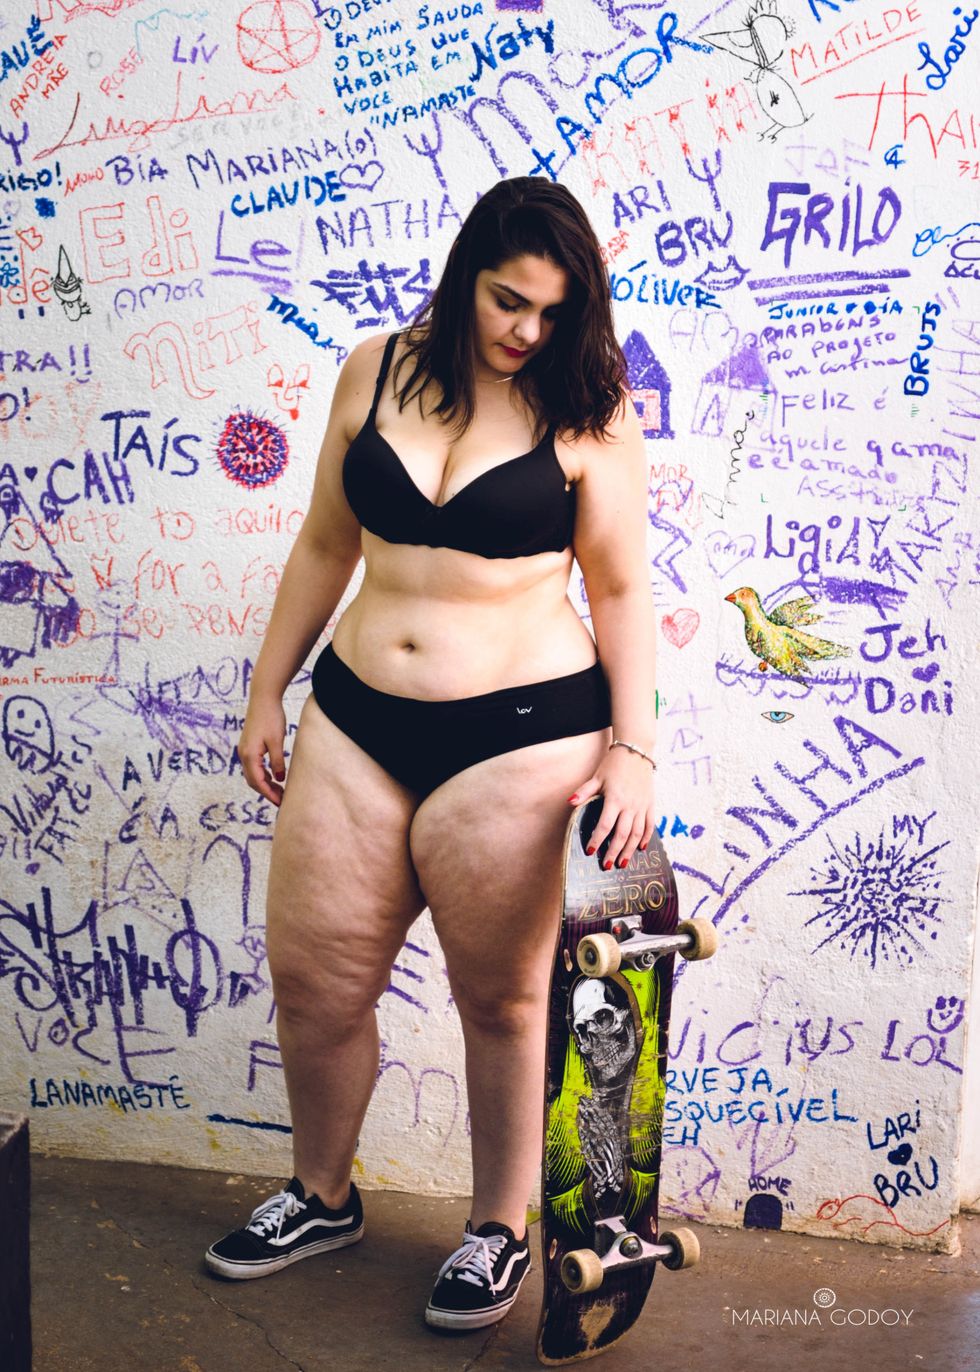 Photo series of beautiful 'fat' women